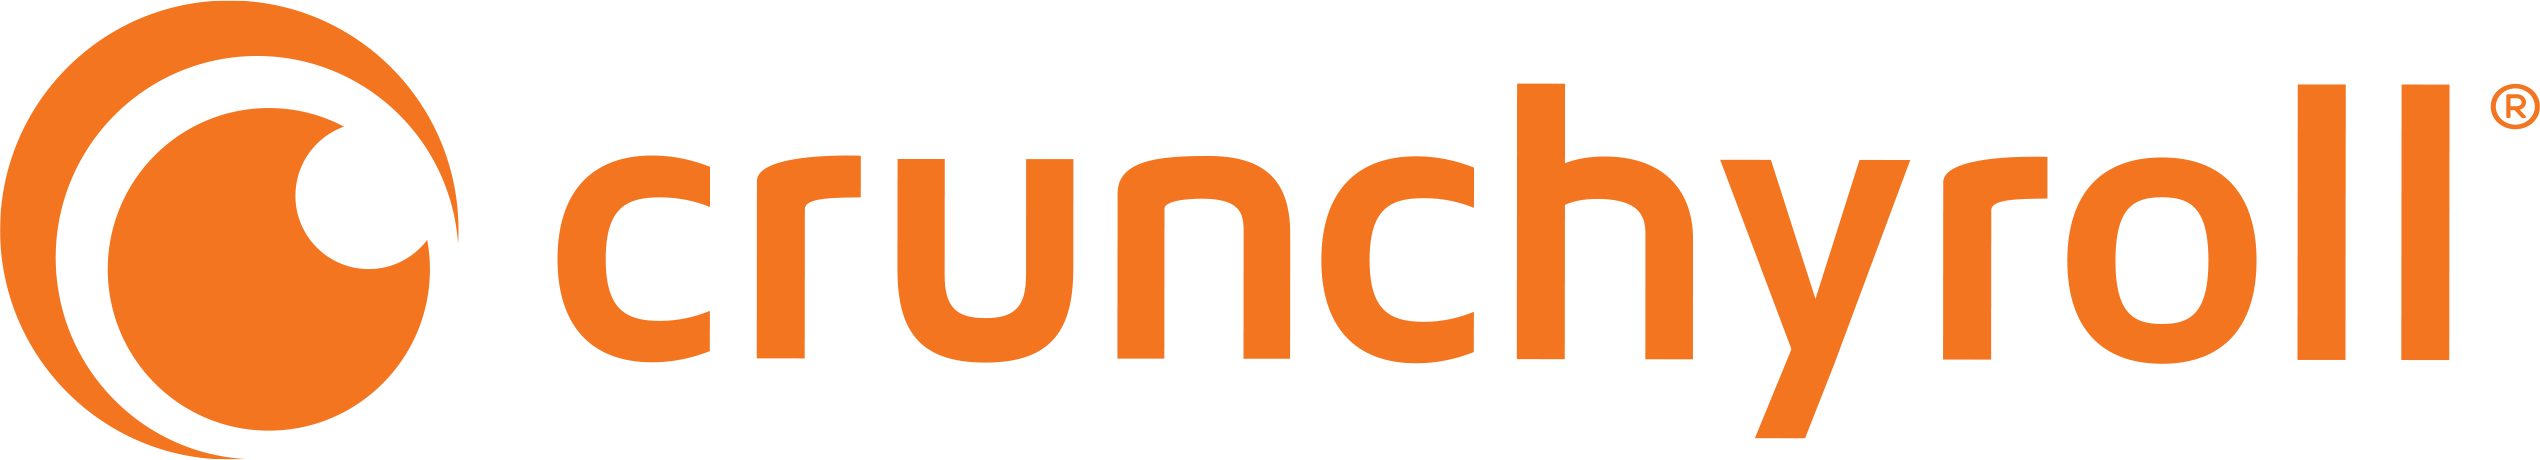 crunchyroll logo horizontal